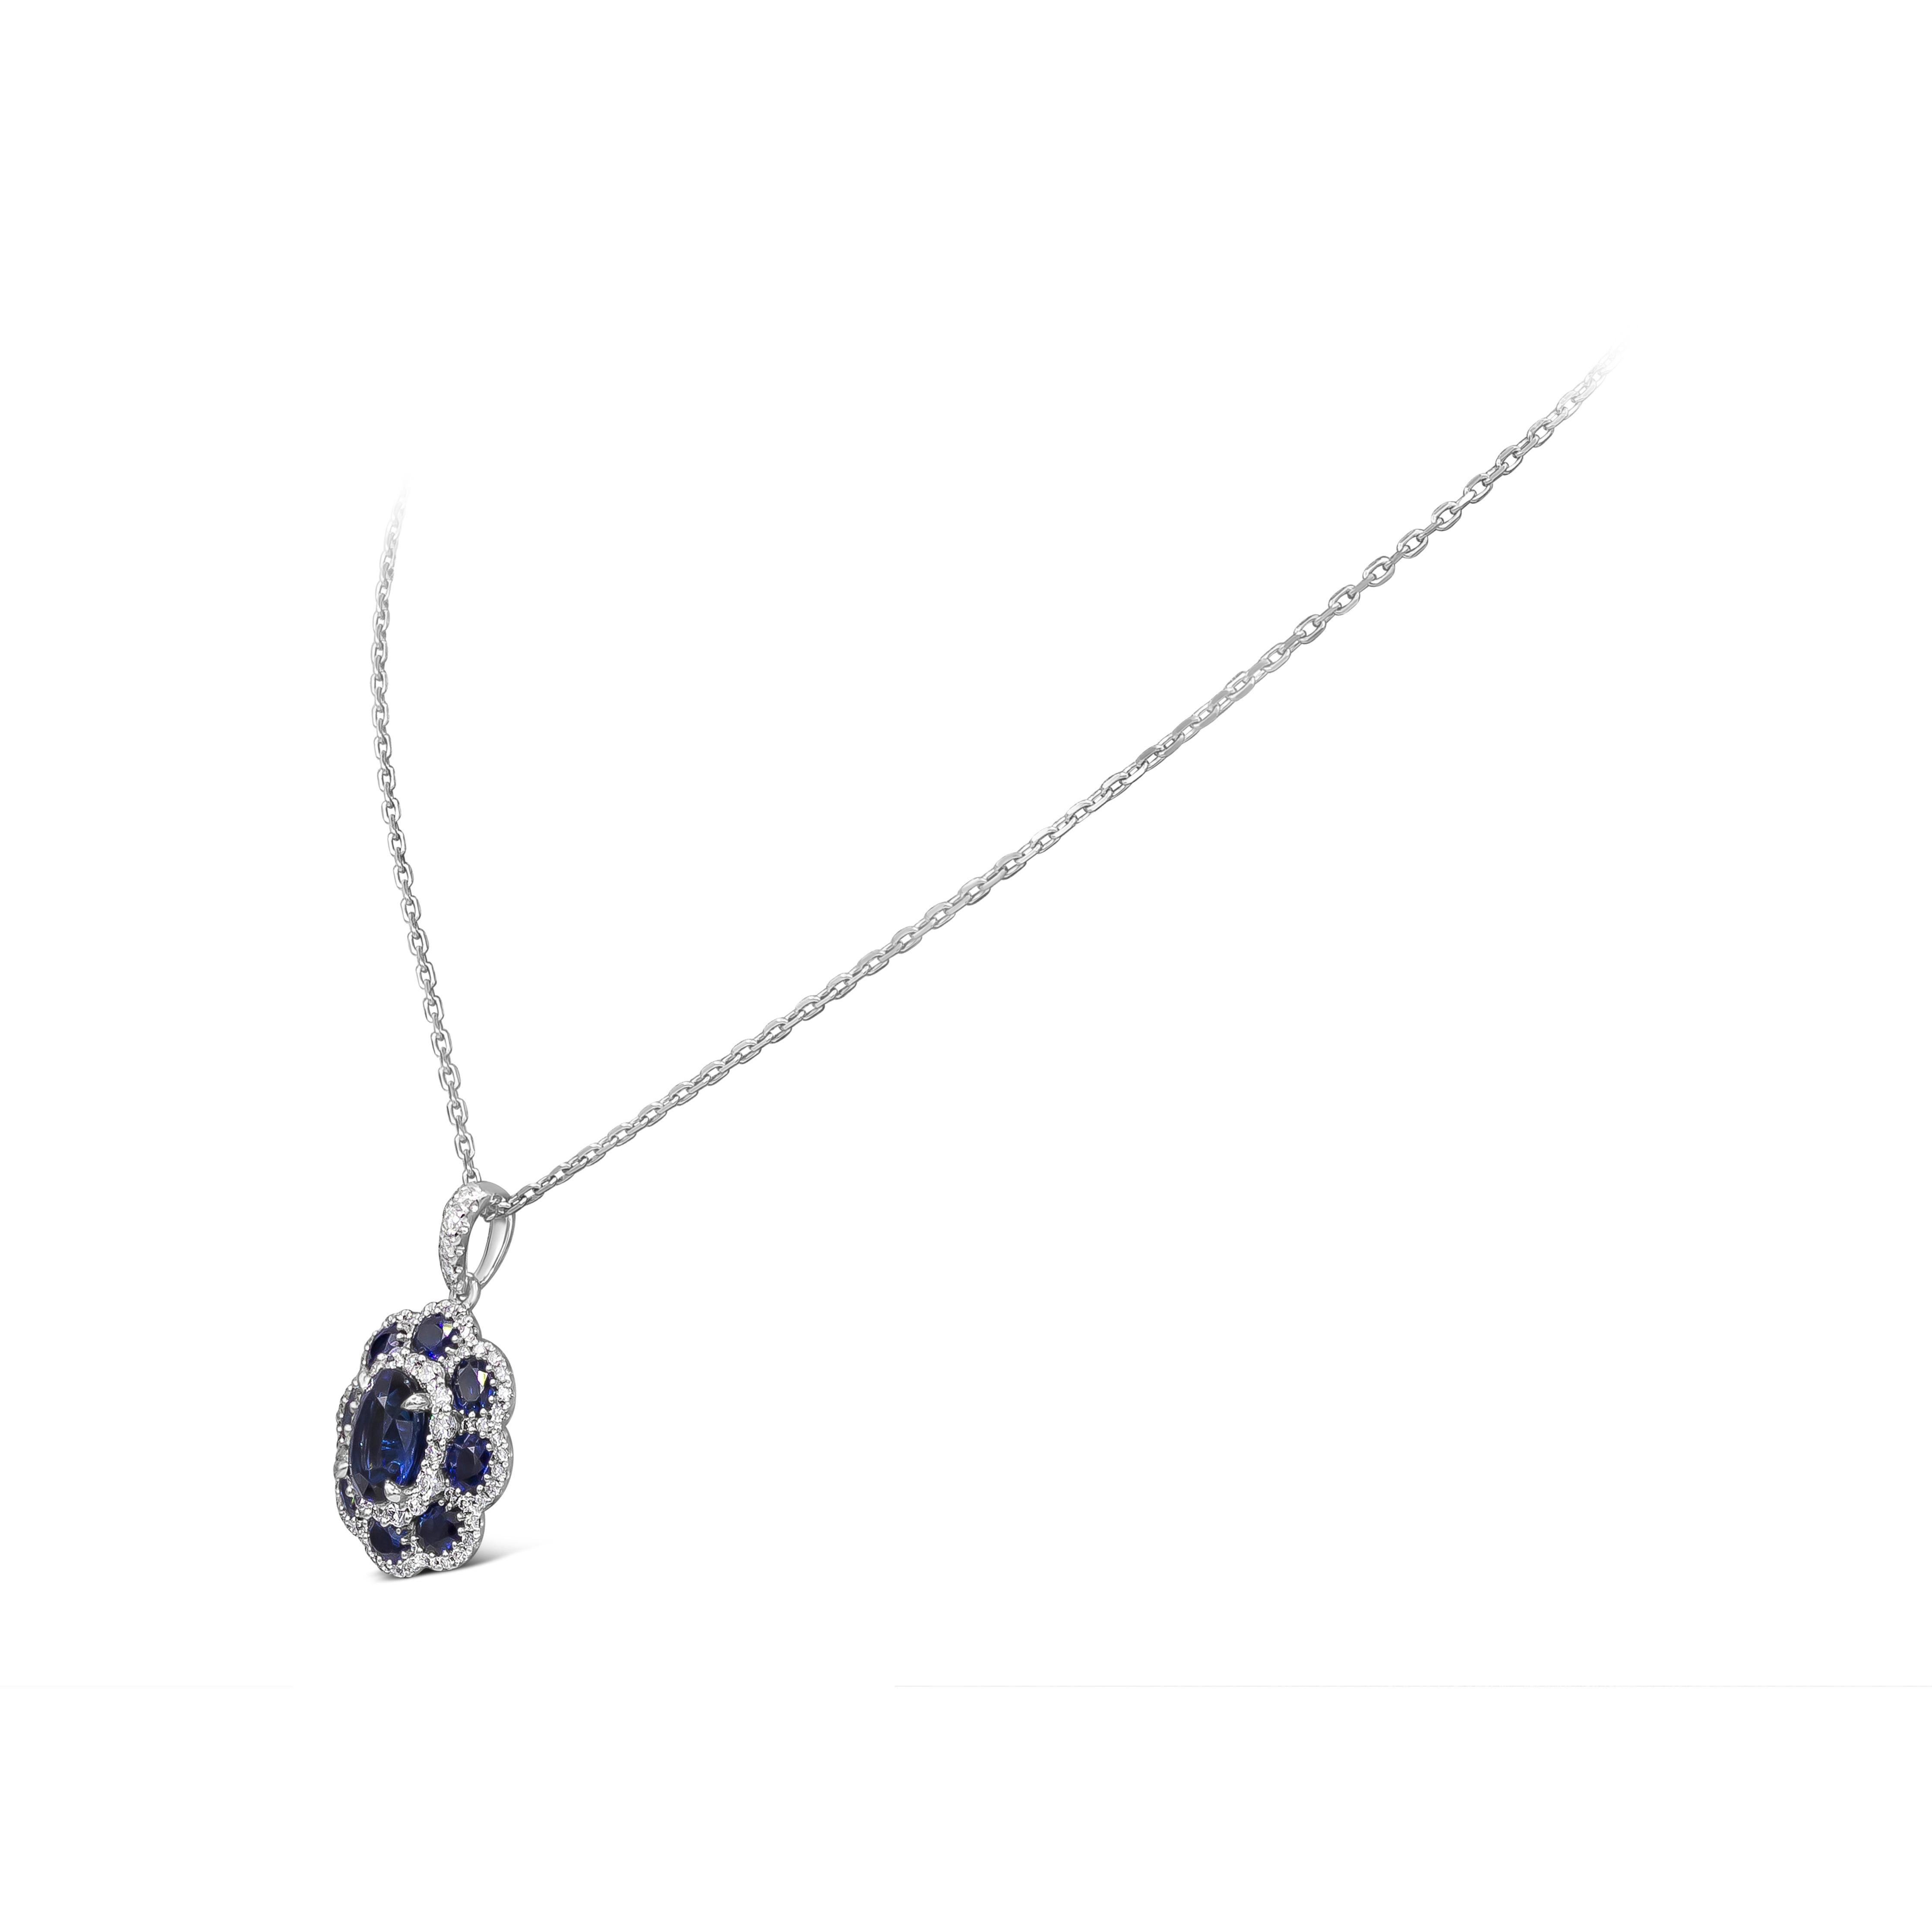 Contemporary Roman Malakov 3.88 Carats Oval Cut Blue Sapphire and Diamond Pendant Necklace For Sale